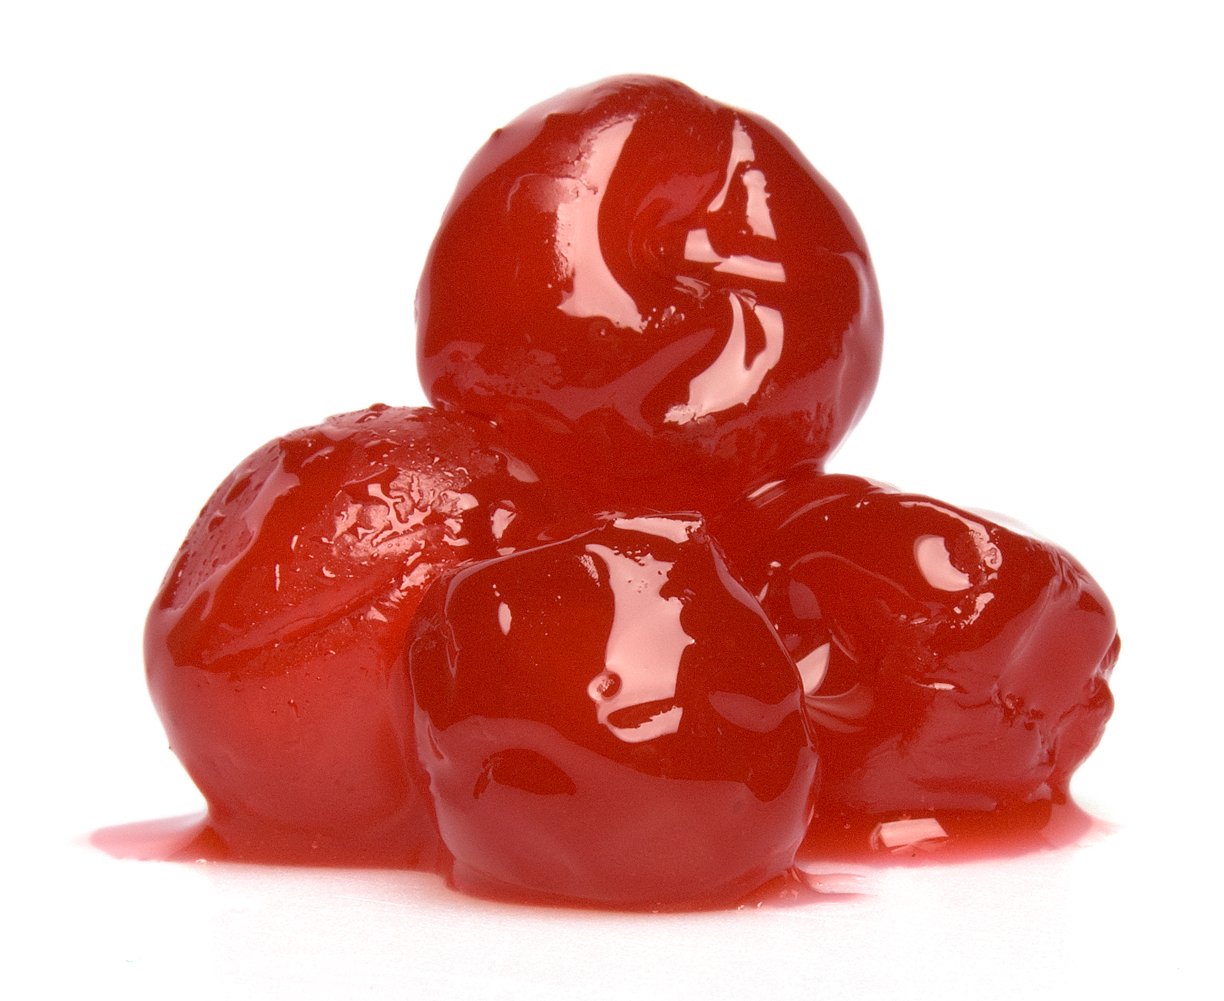 Glazed Red Cherries image zoom